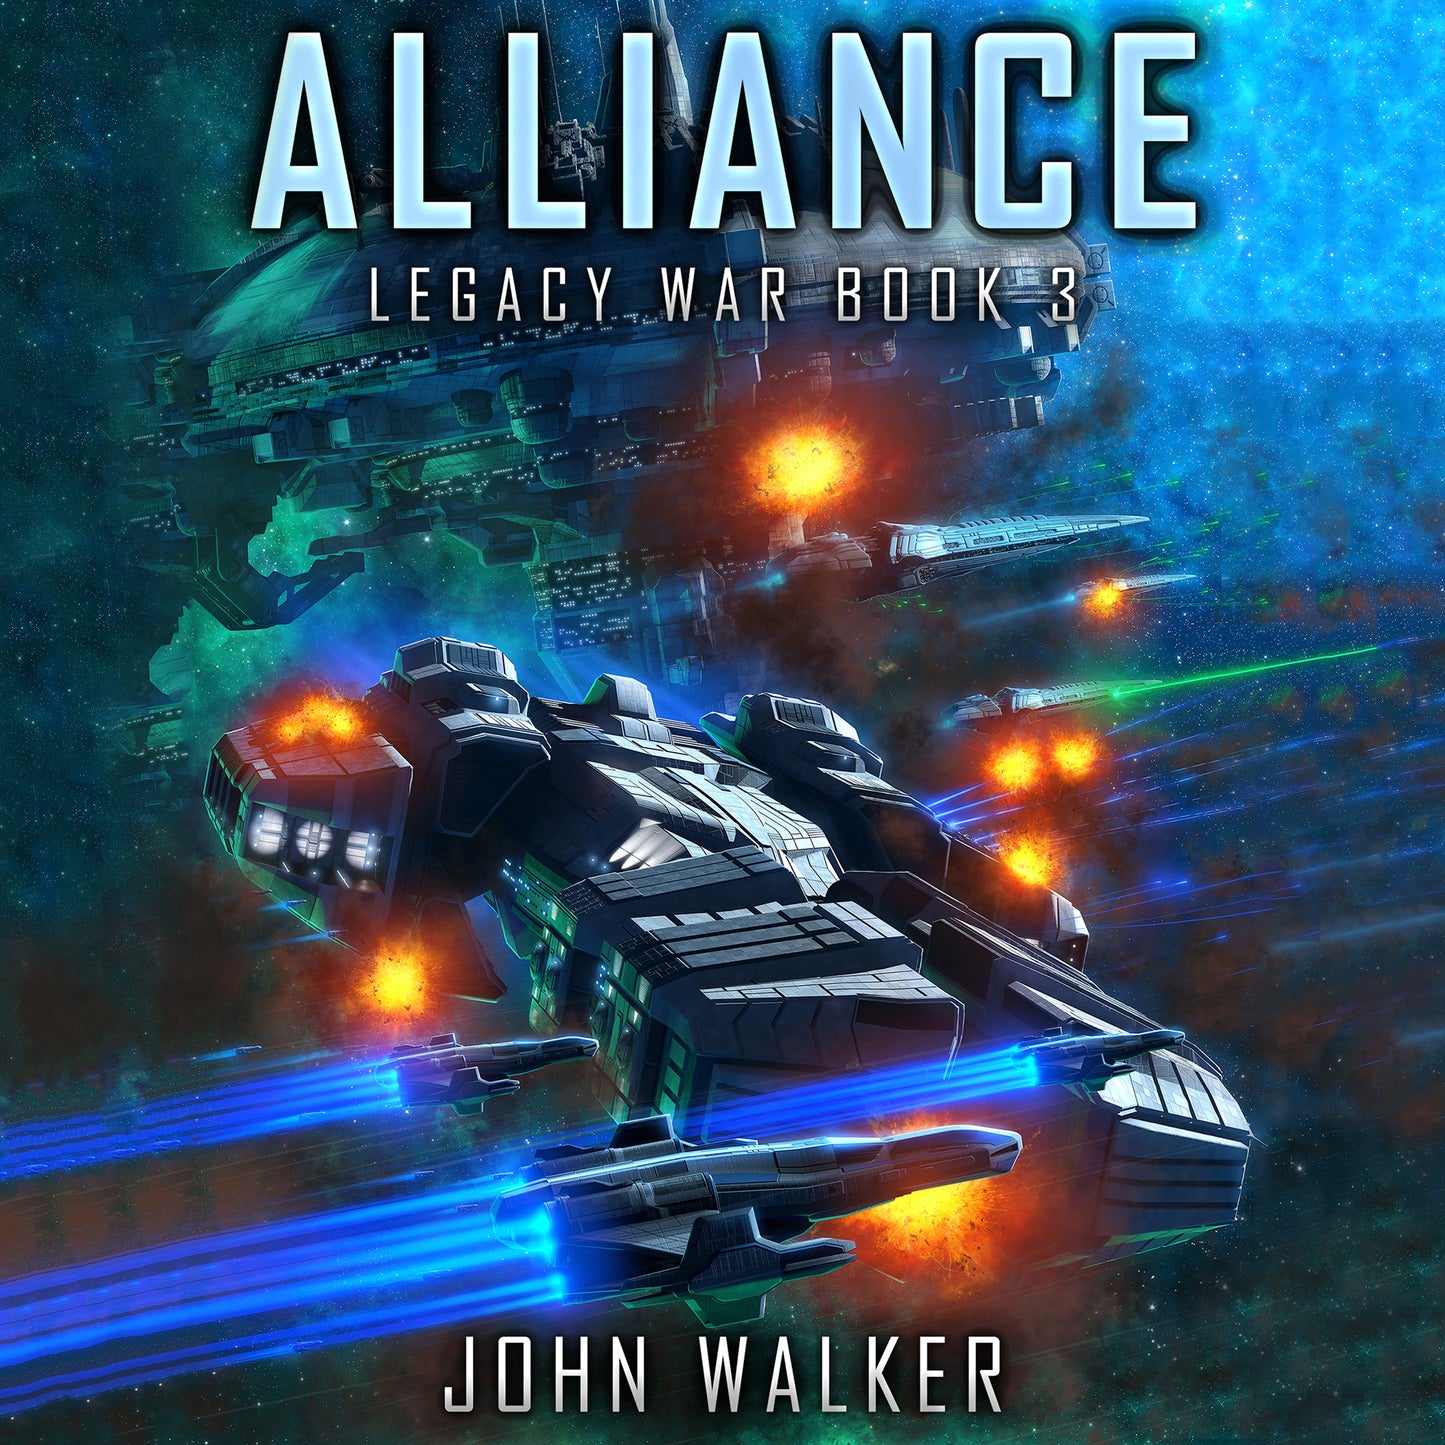 Alliance: Legacy War Book 3 Audiobook